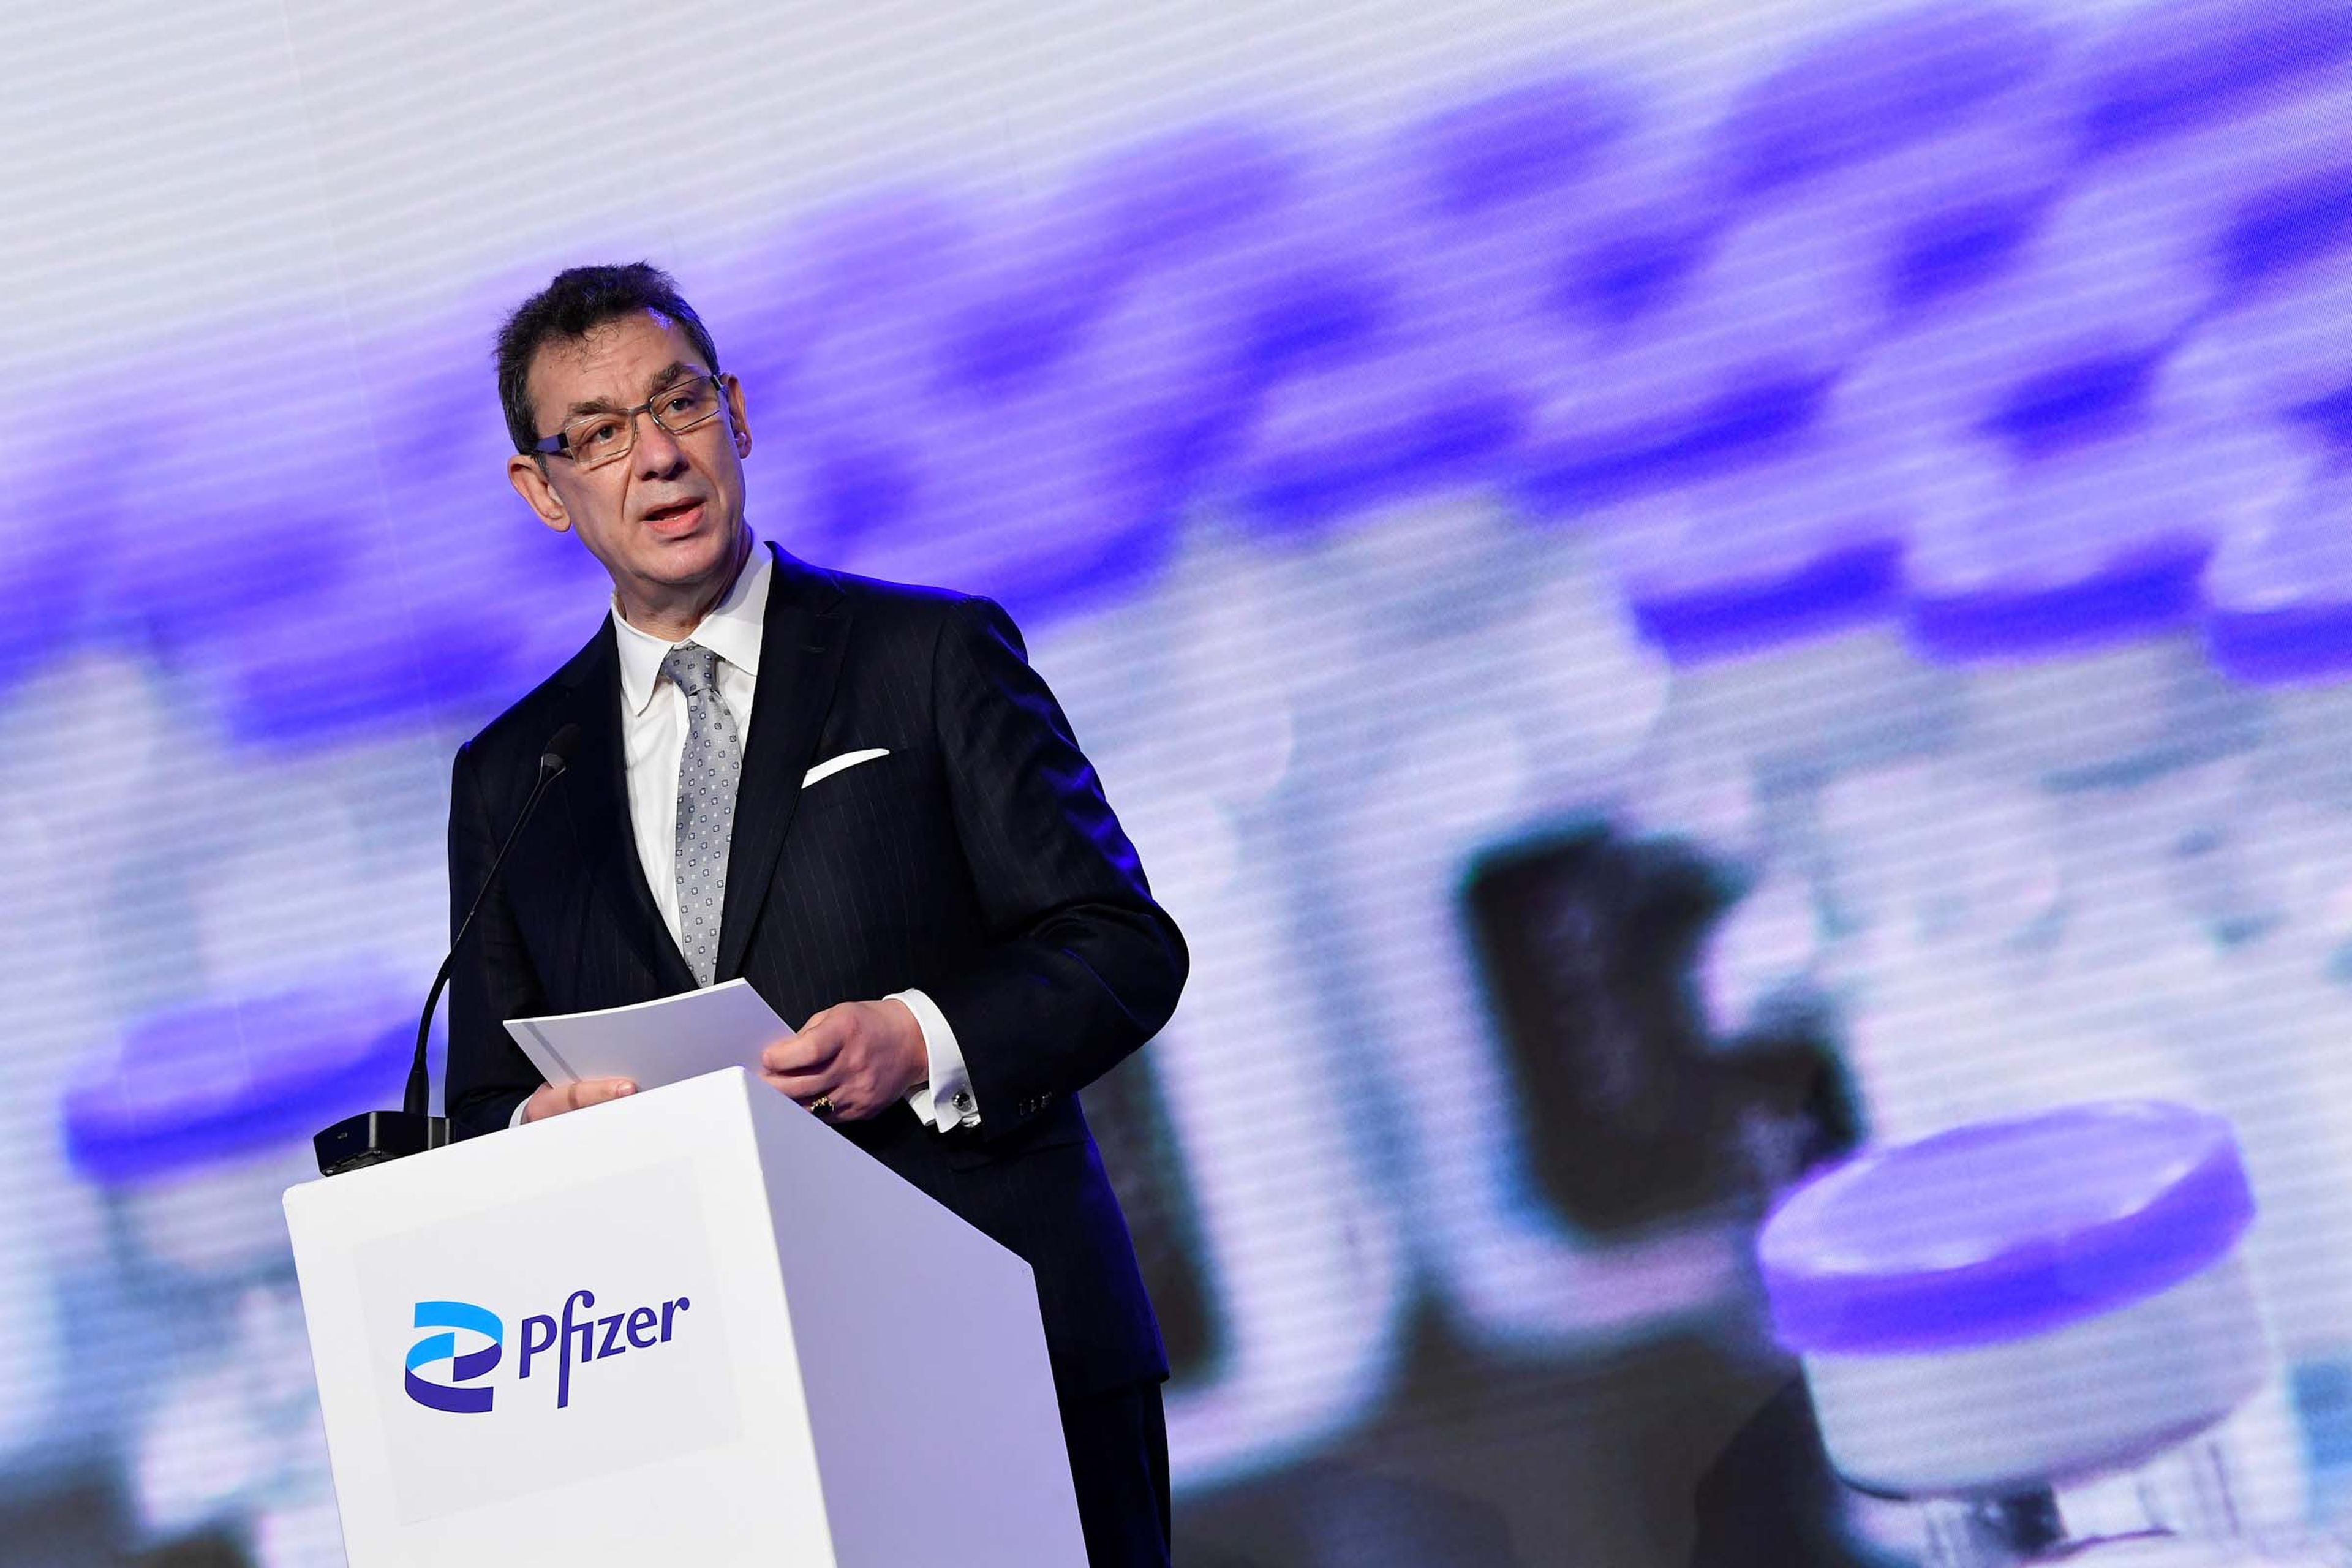 Albert Bourla, CEO de Pfizer.